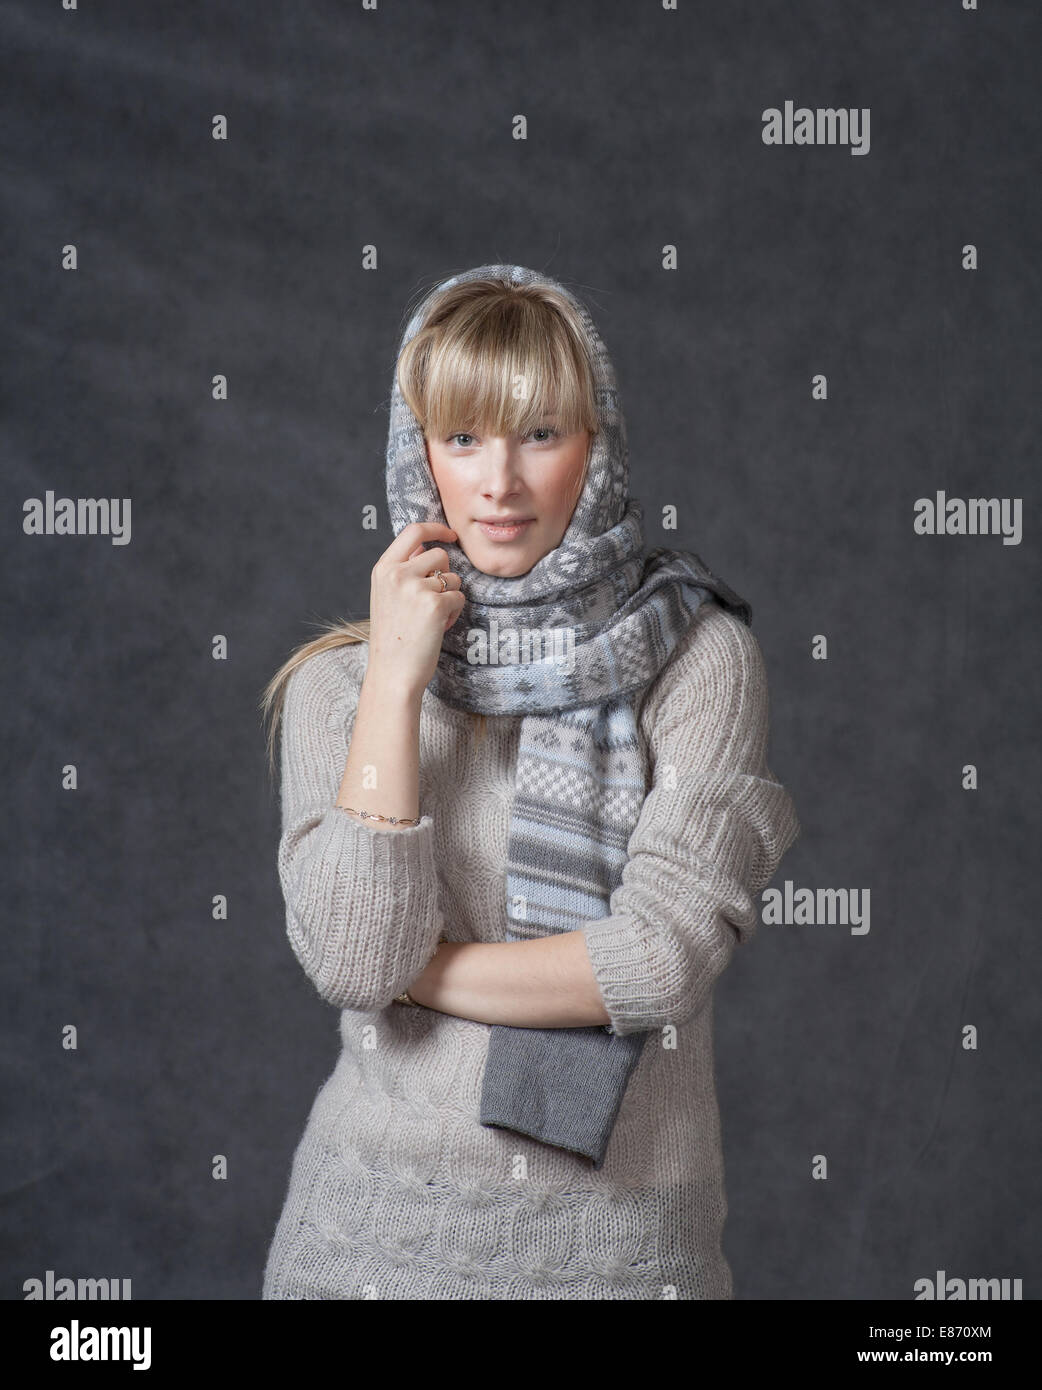 Portrait of woman on dark background wearing woolen accessories Stock Photo